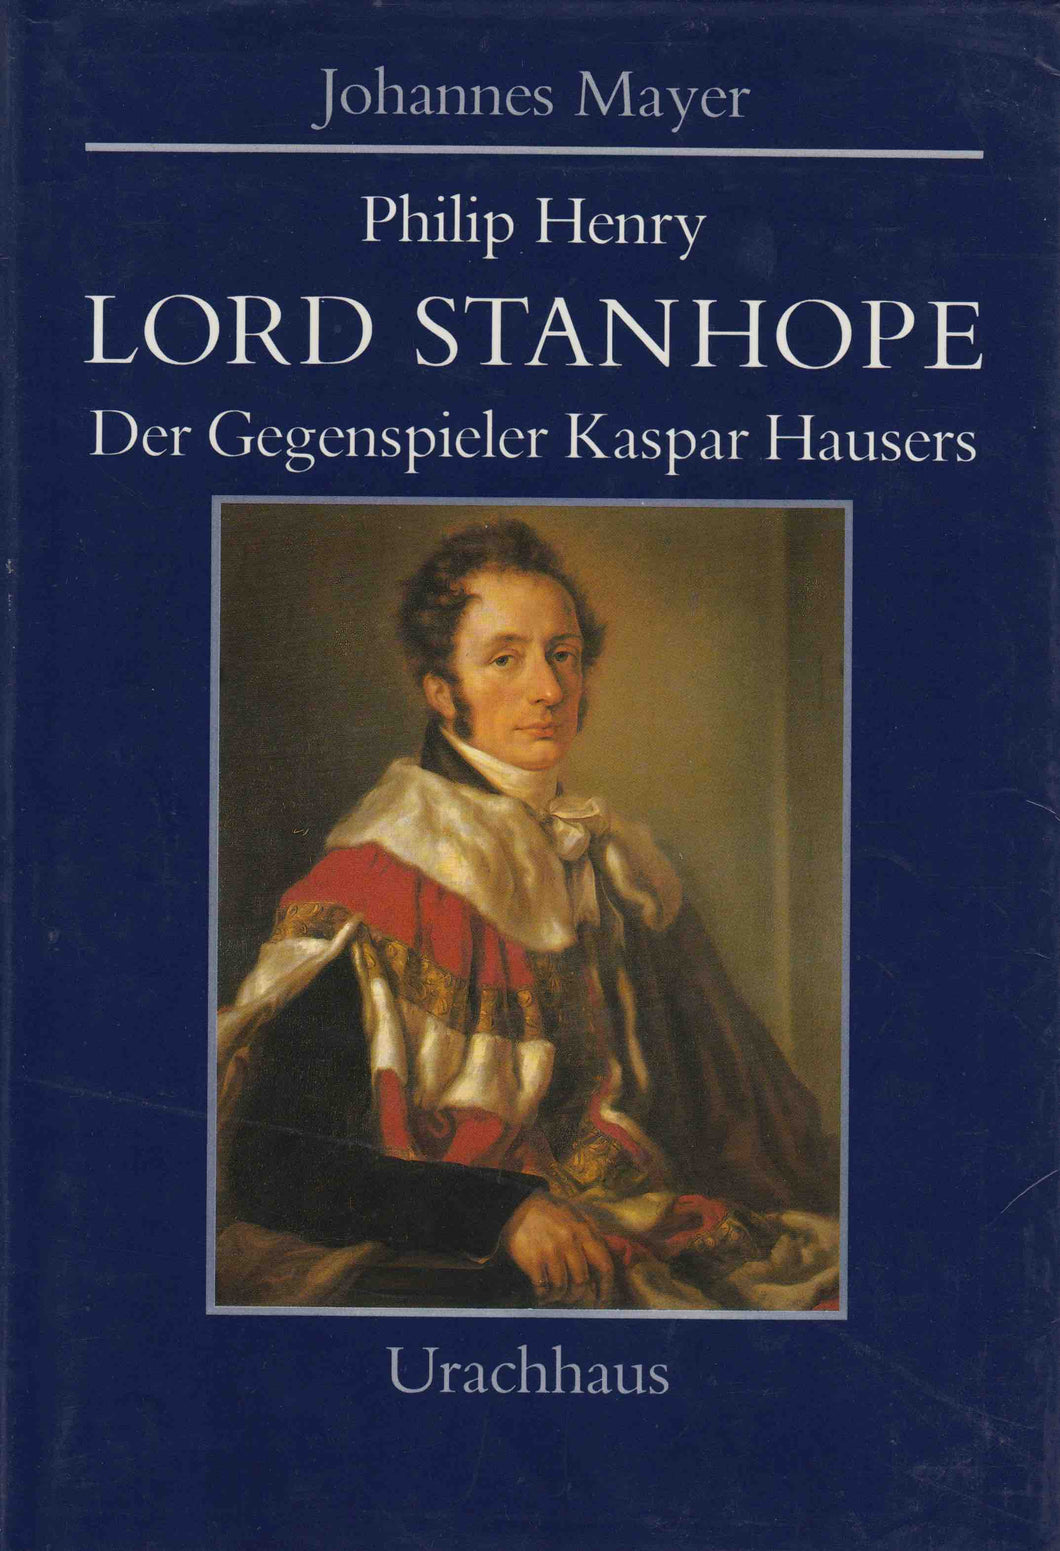 Lord Stanhope